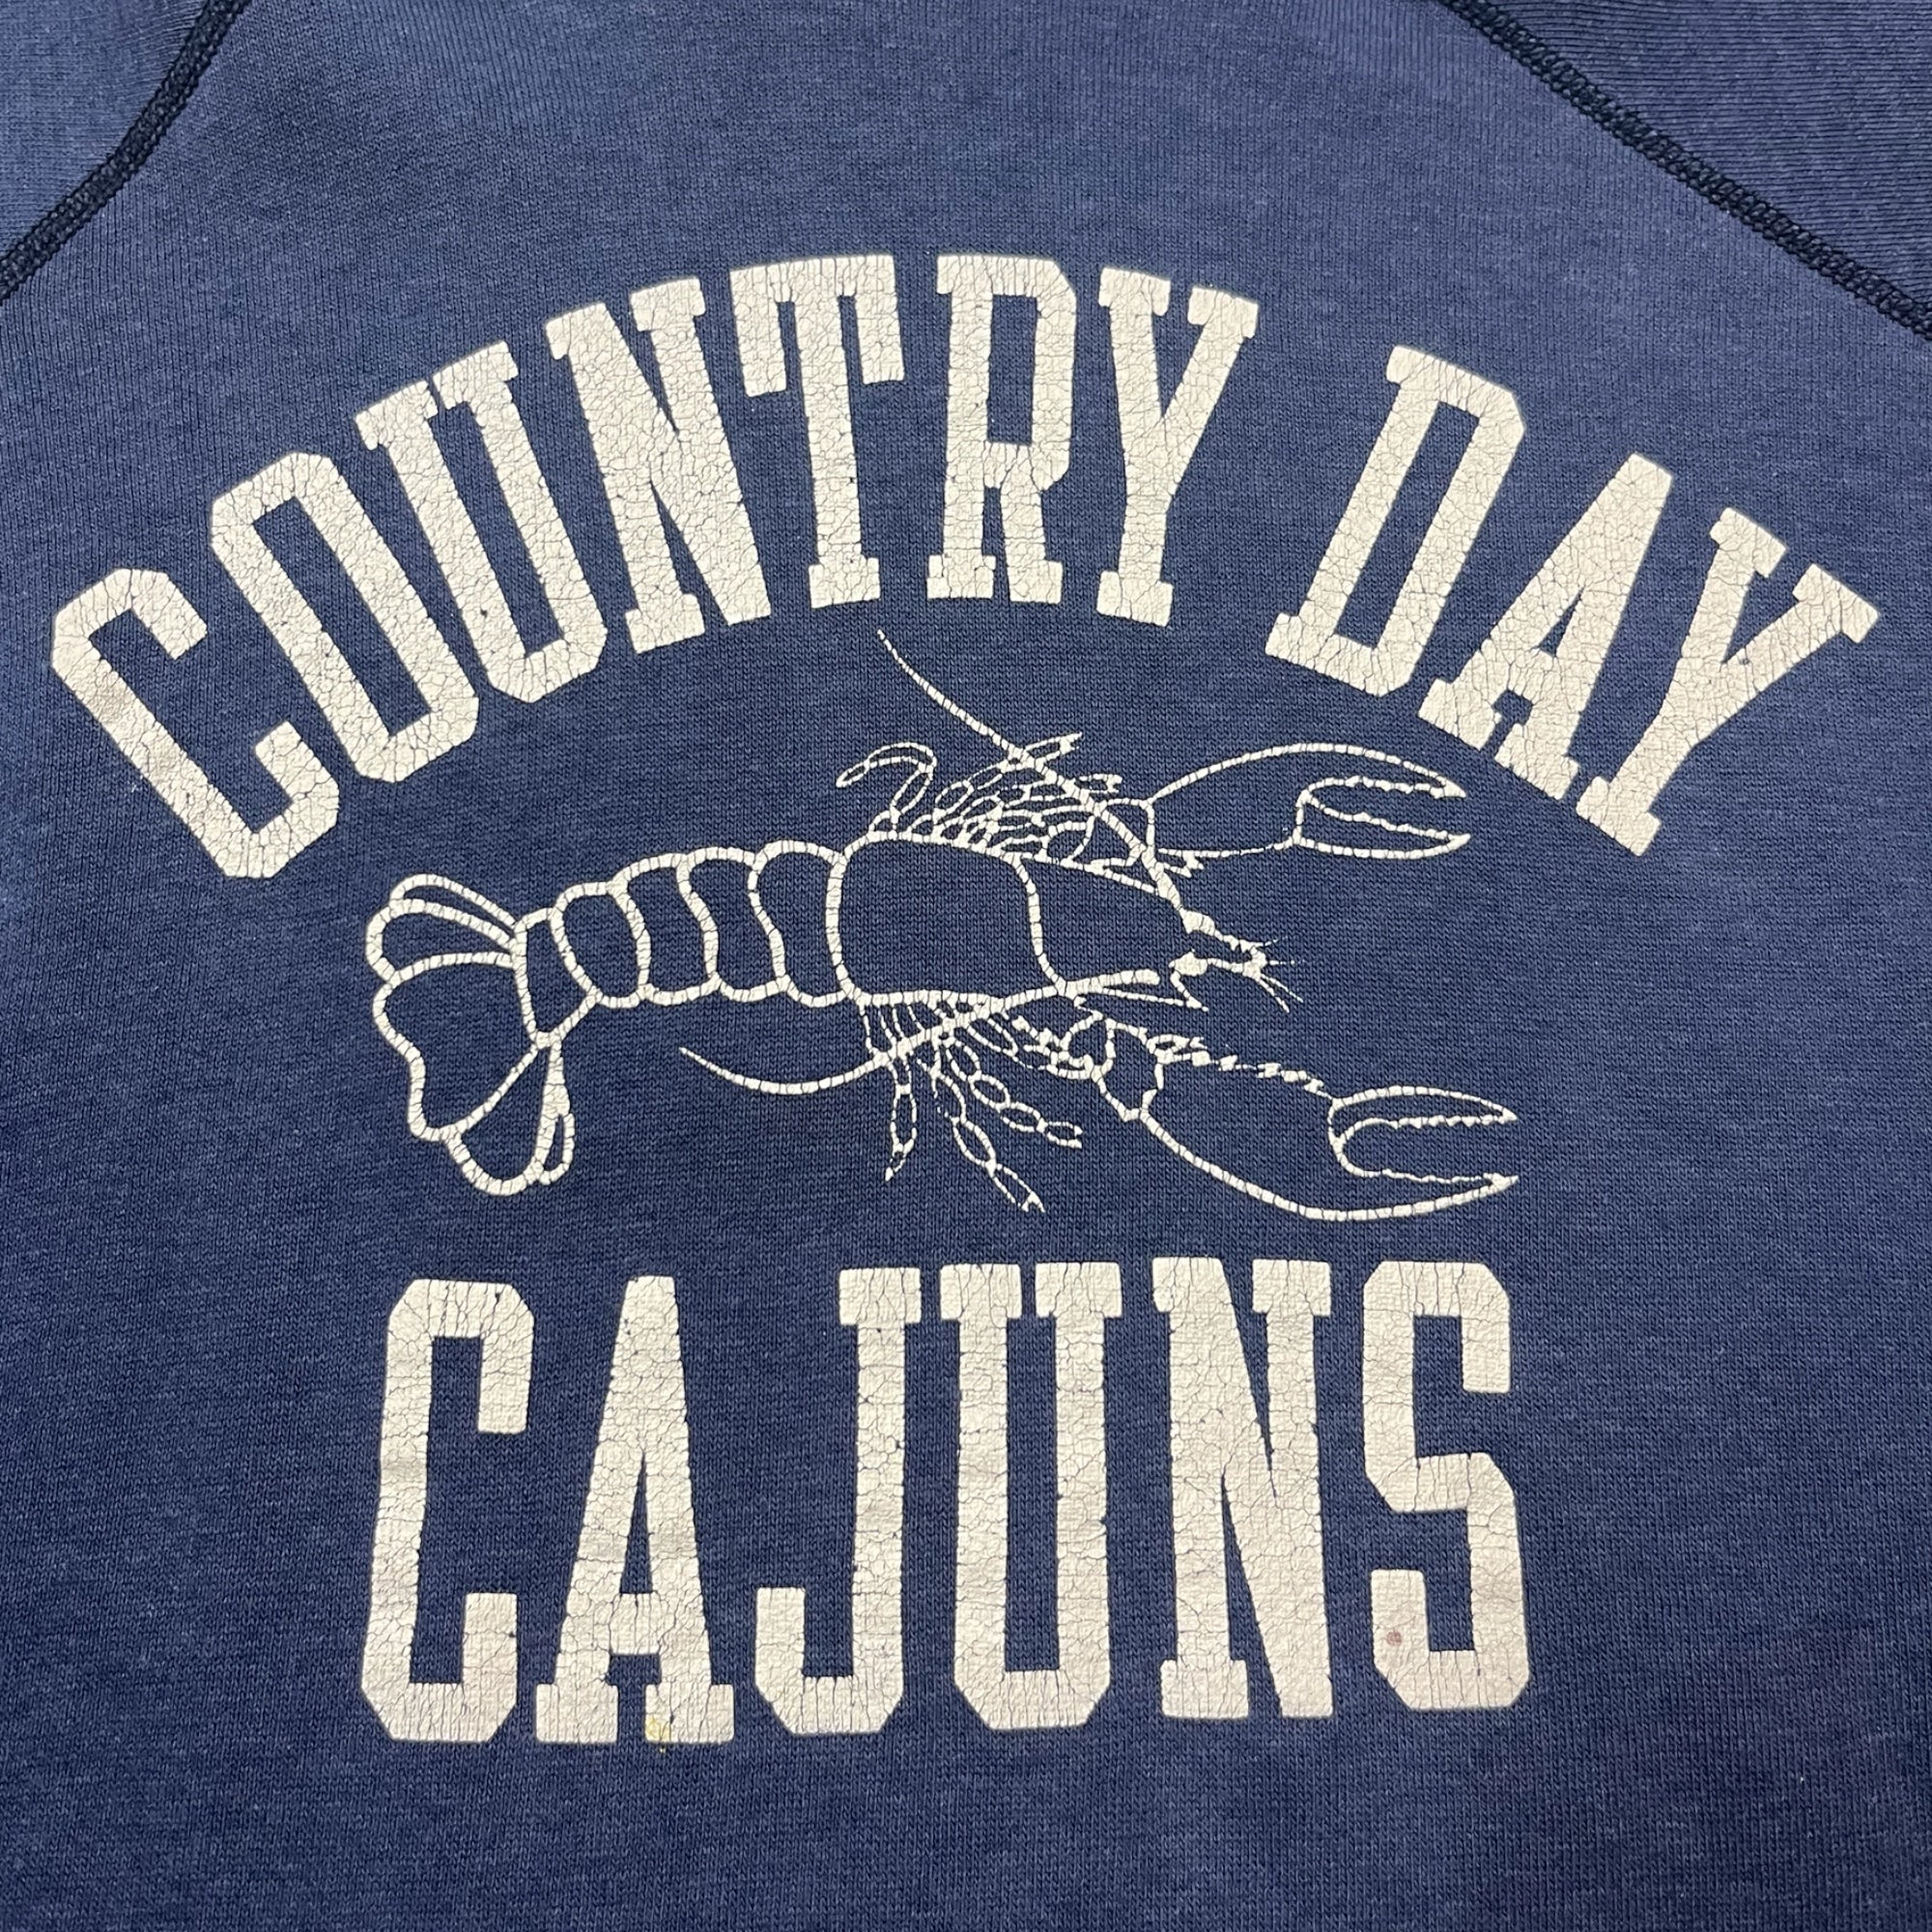 1970s Country Day Cajuns Hooded Raglan Sweatshirt - Faded Blue - L/XL